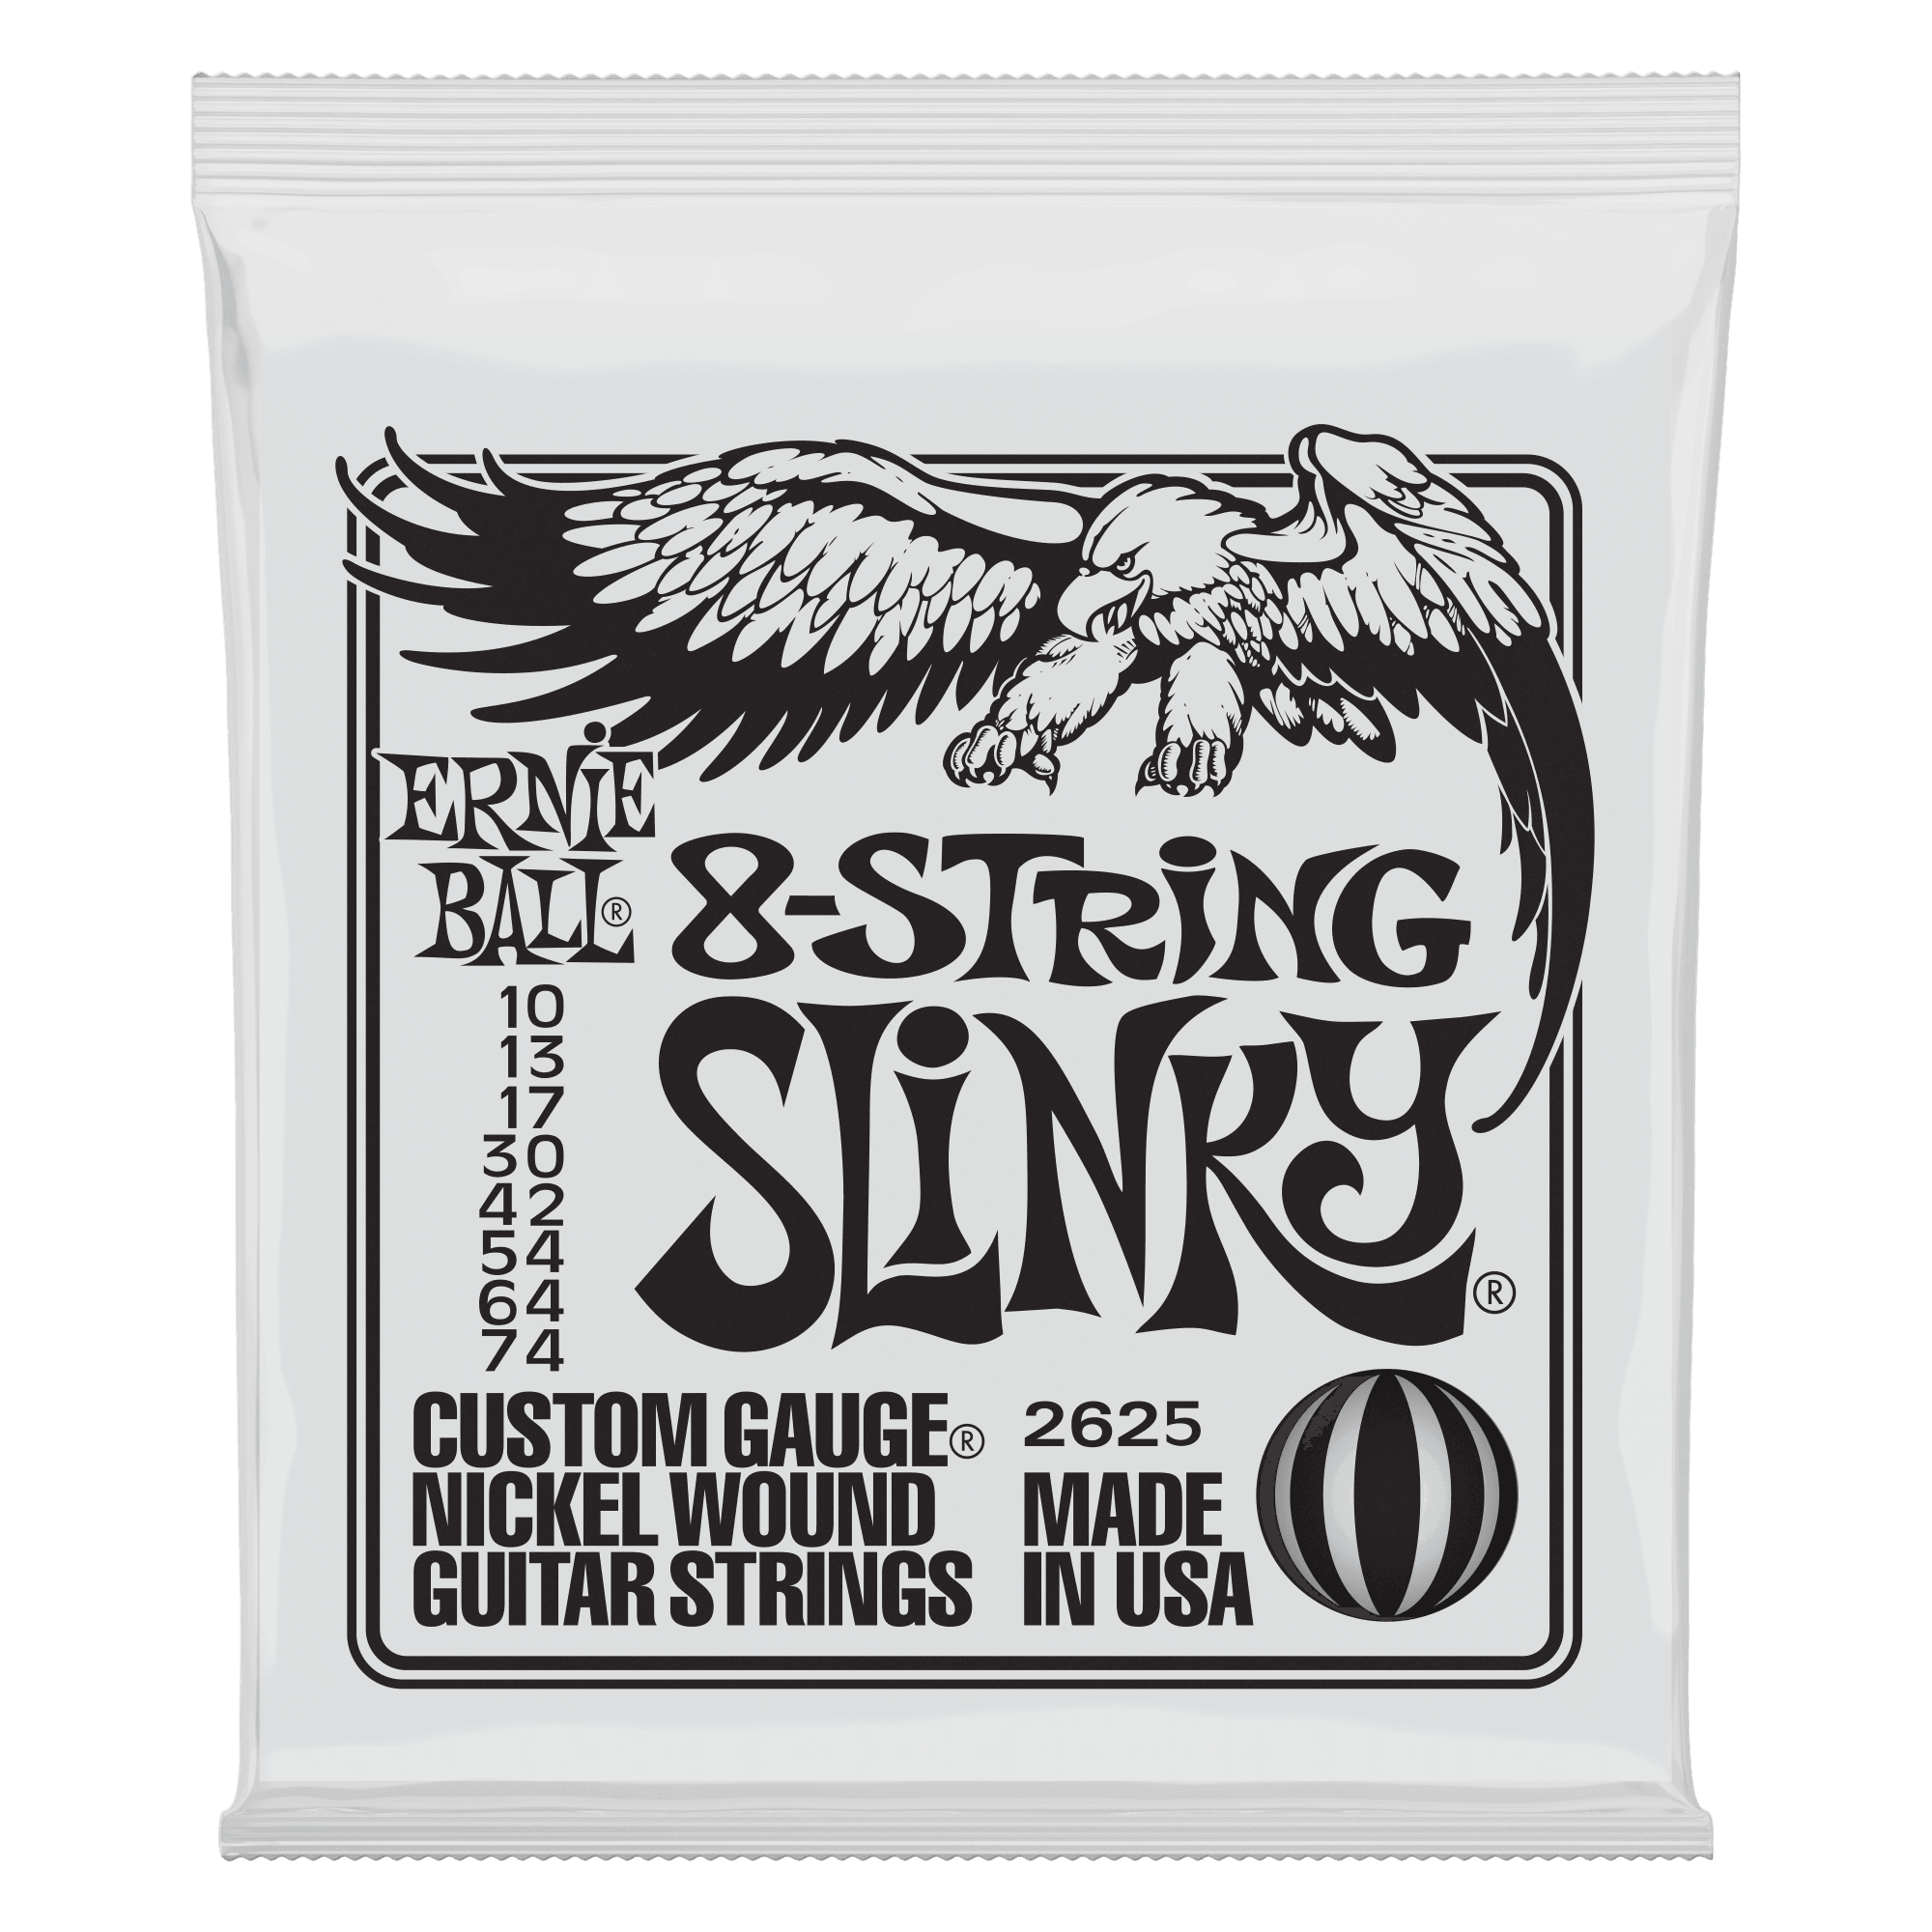 Ernie Ball - Electric Guitar 8 Strings Set 10-74 Slinky 8 String Nickel Wound 2625 - Strings - Electric Guitar by Ernie Ball at Muso's Stuff